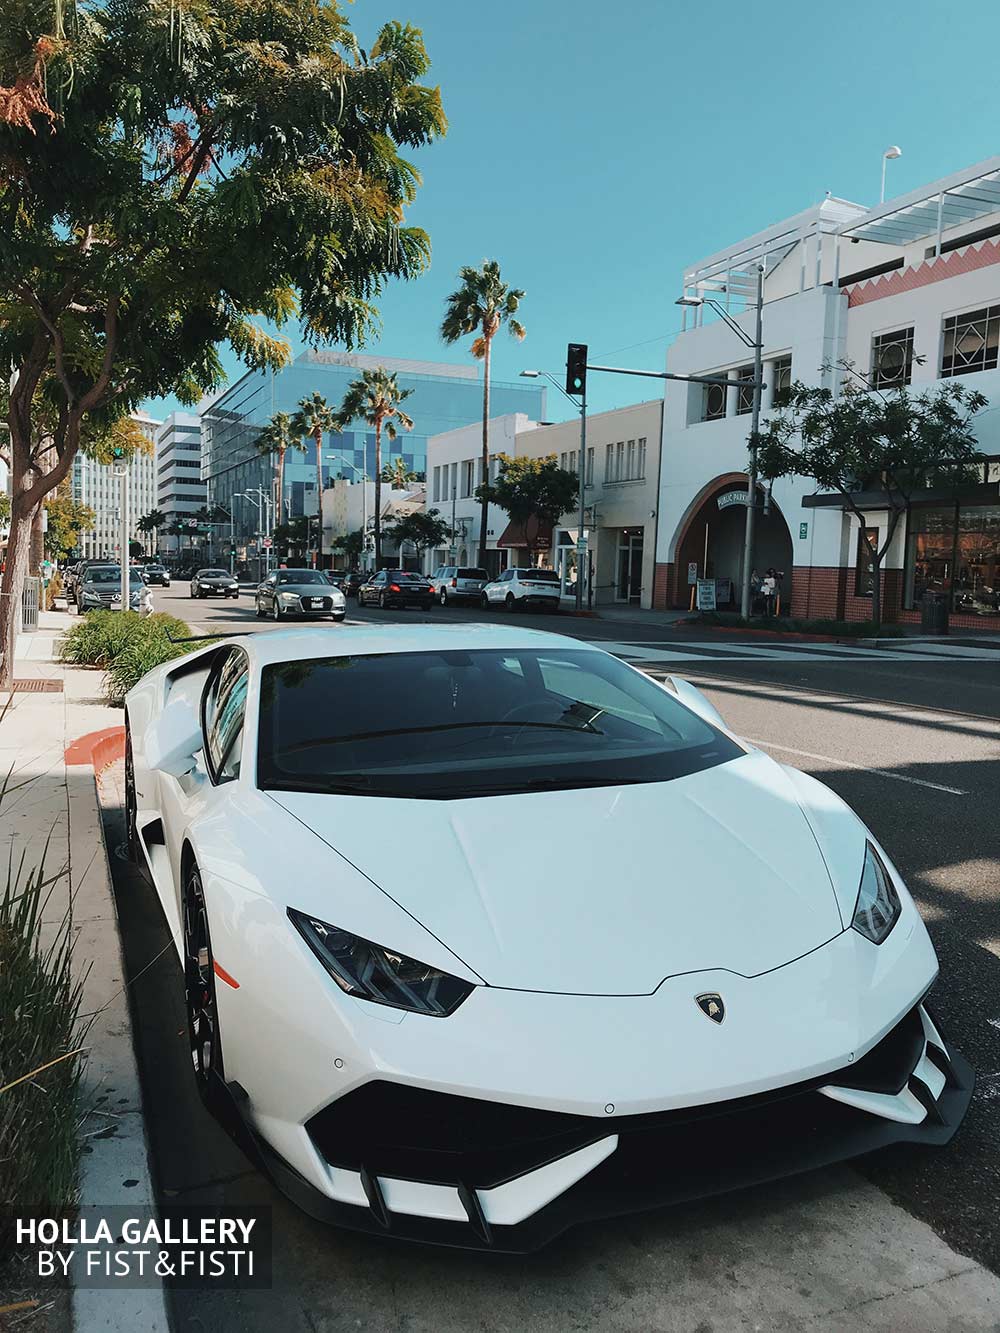 Белая Lamborghini припаркована среди пальм в южном городе